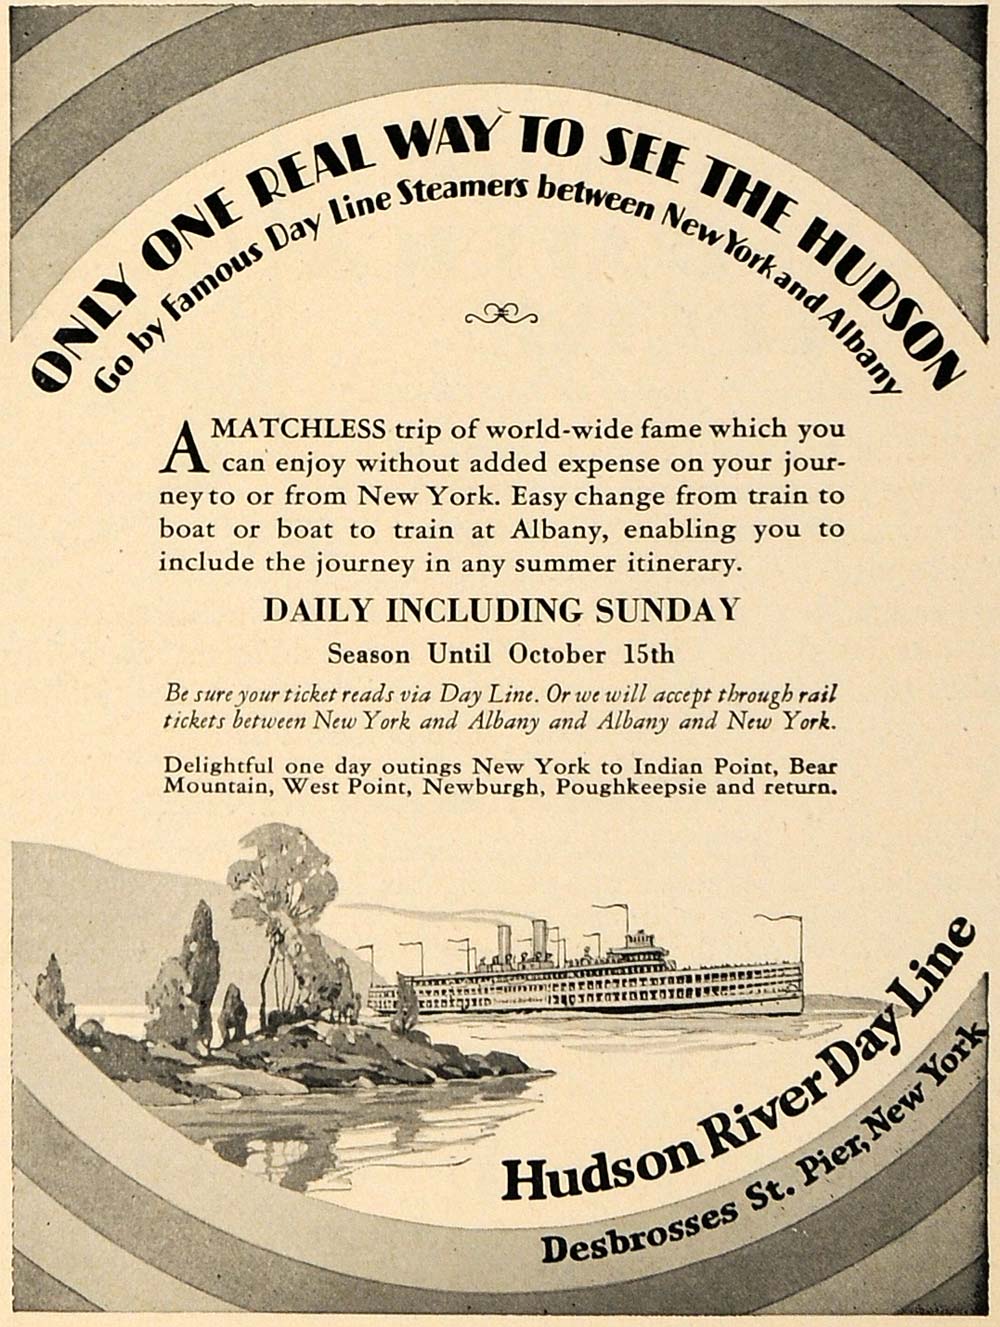 1928 Ad Hudson River Day Line Debrosses St Pier Boat - ORIGINAL ADVERTISING TRV1